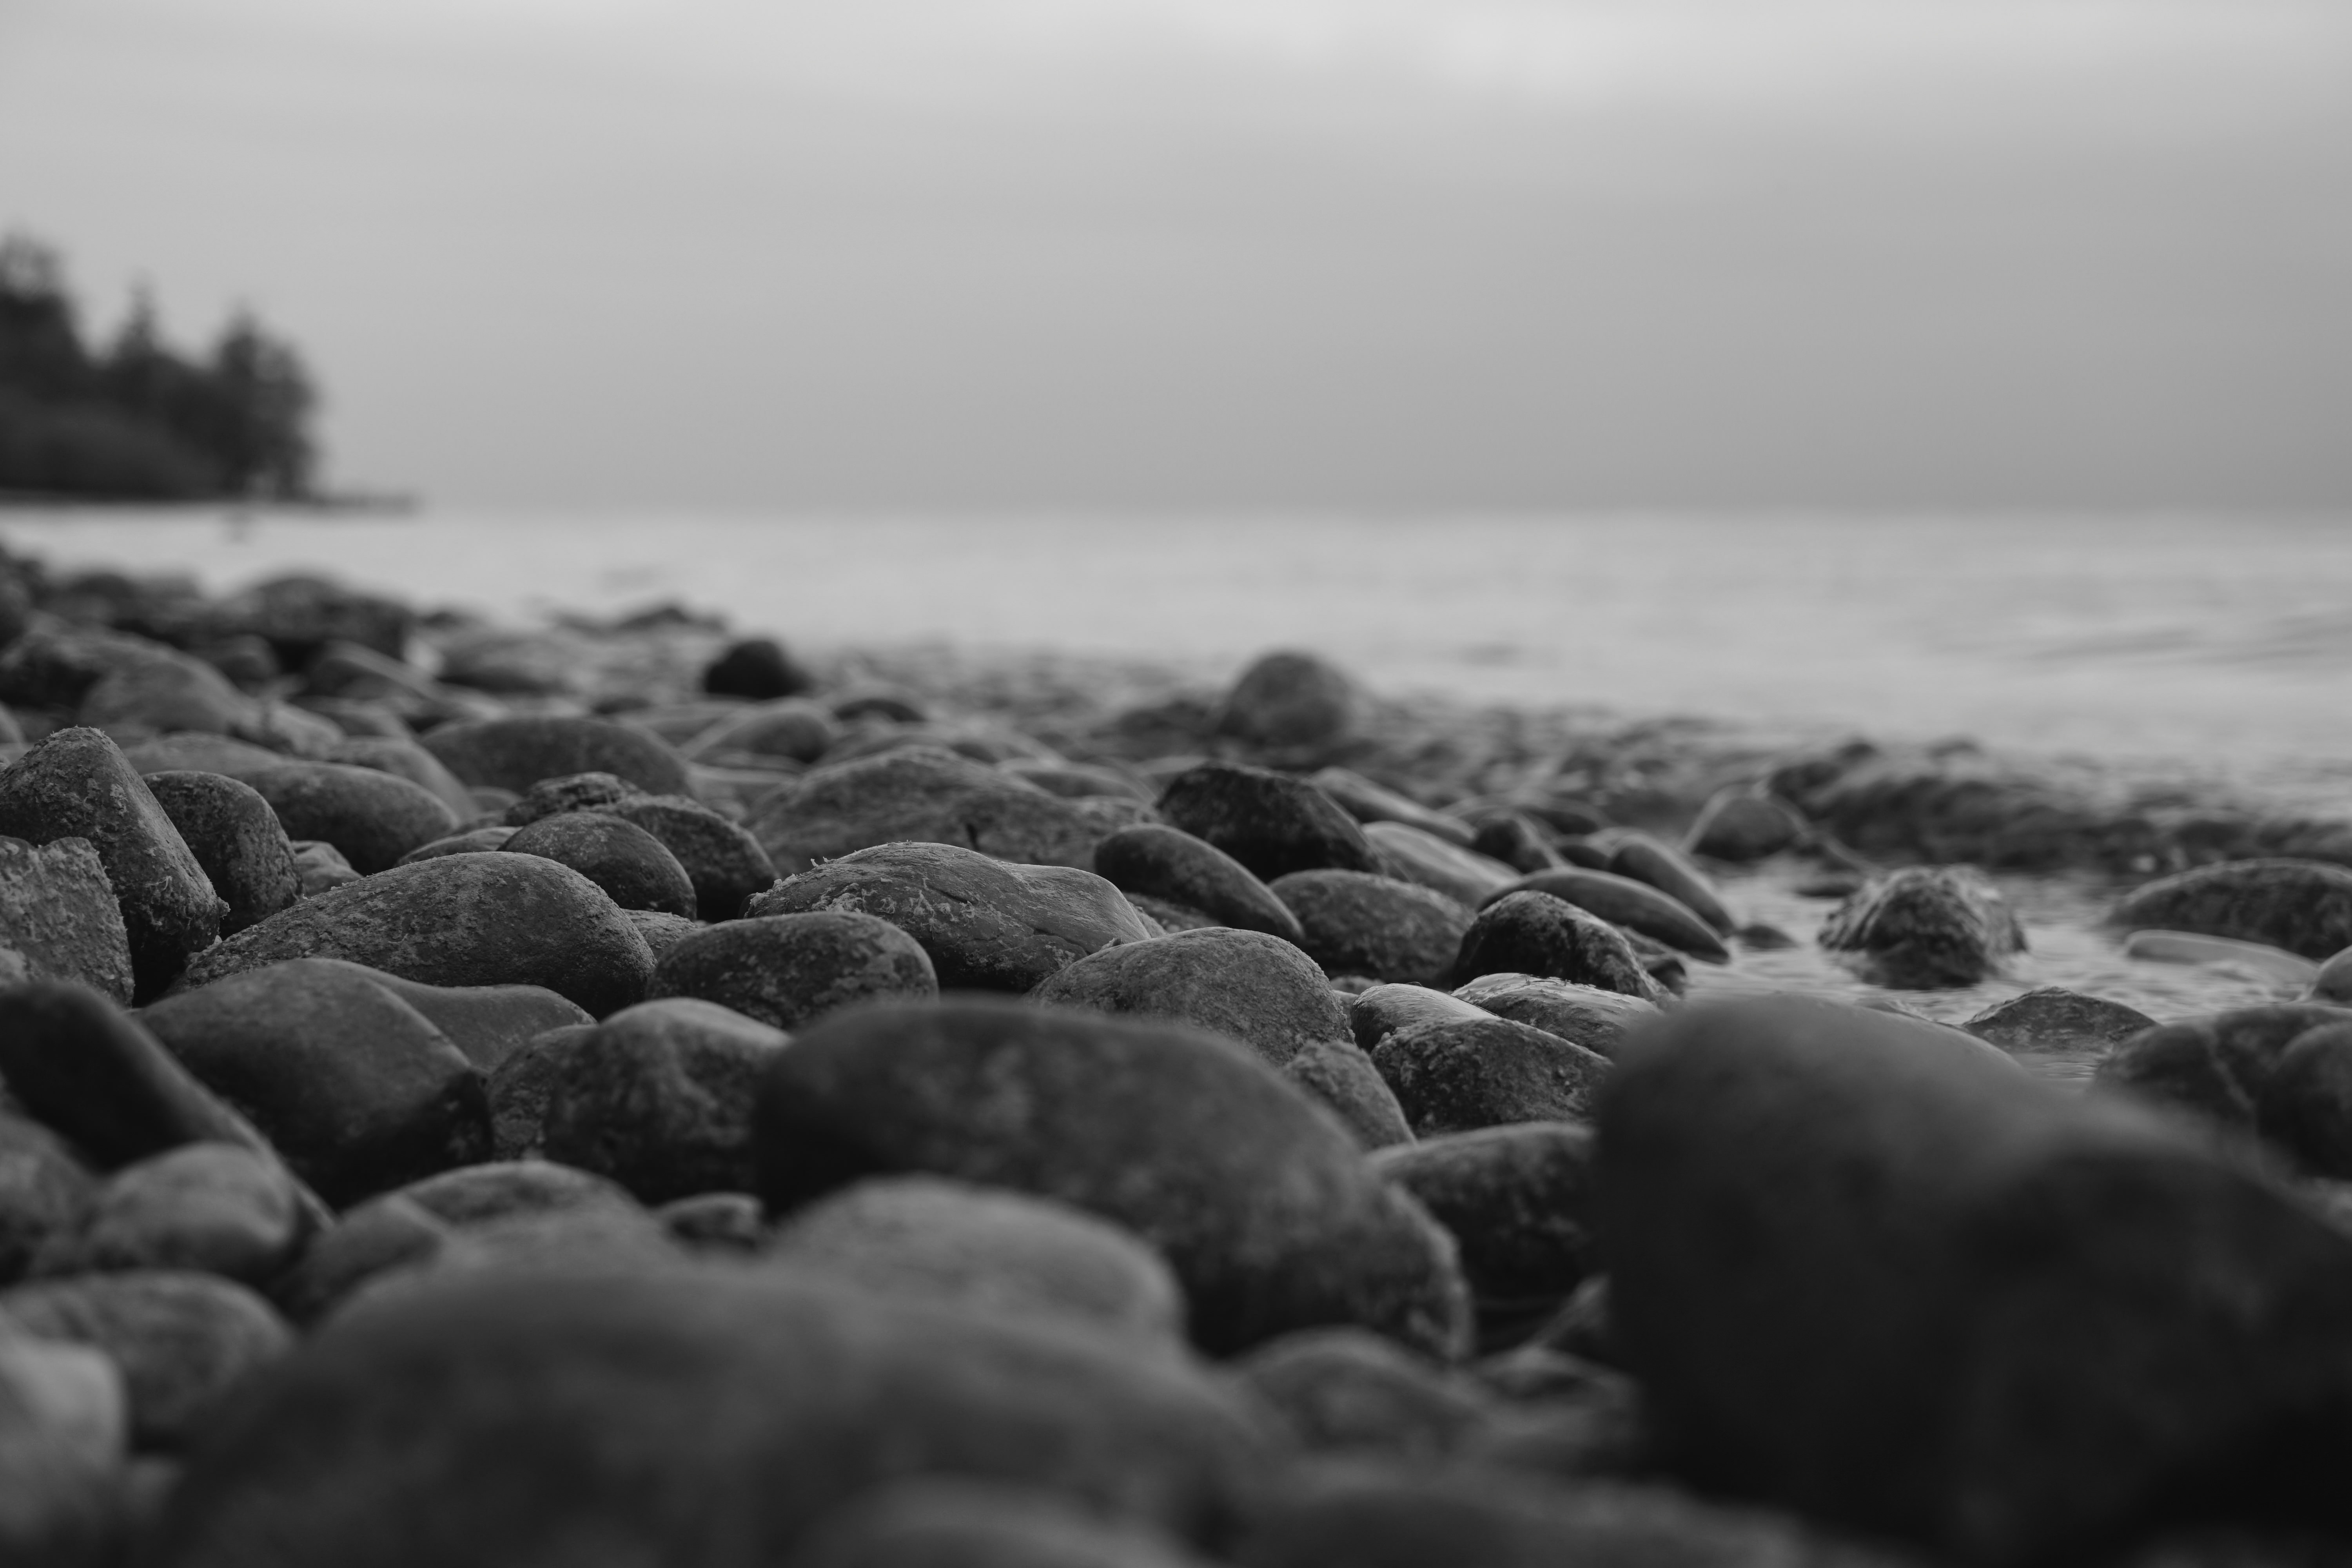 greyscale photos of rocks